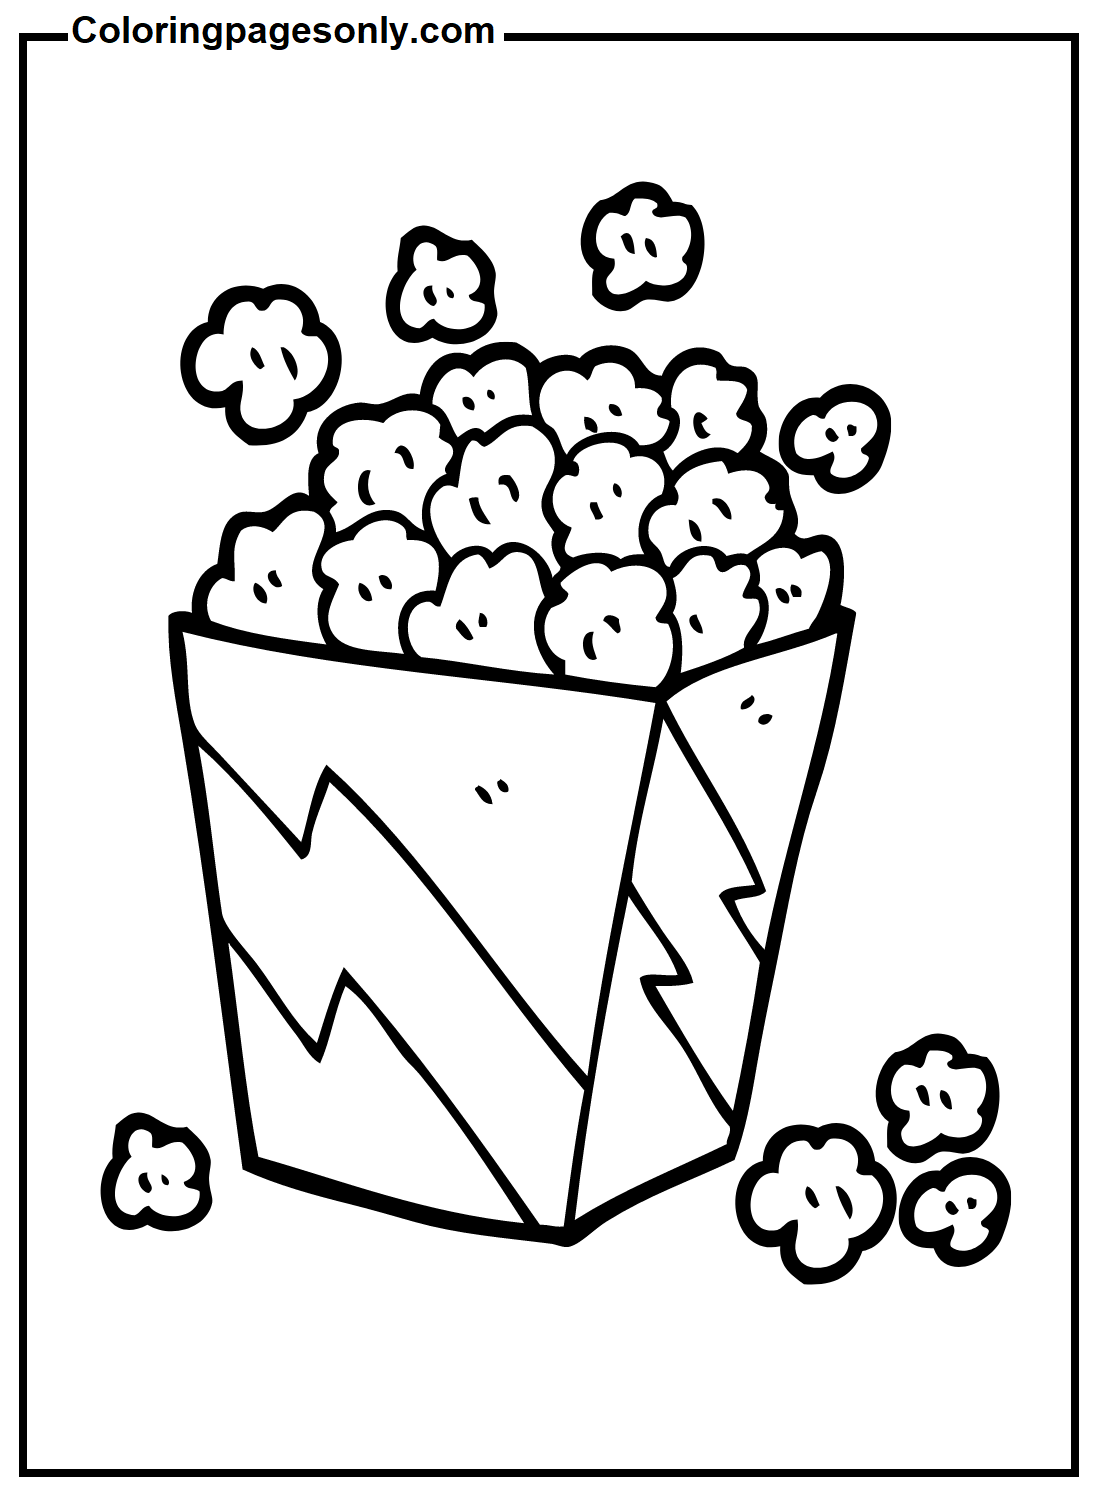 Popcorn aus Popcorn